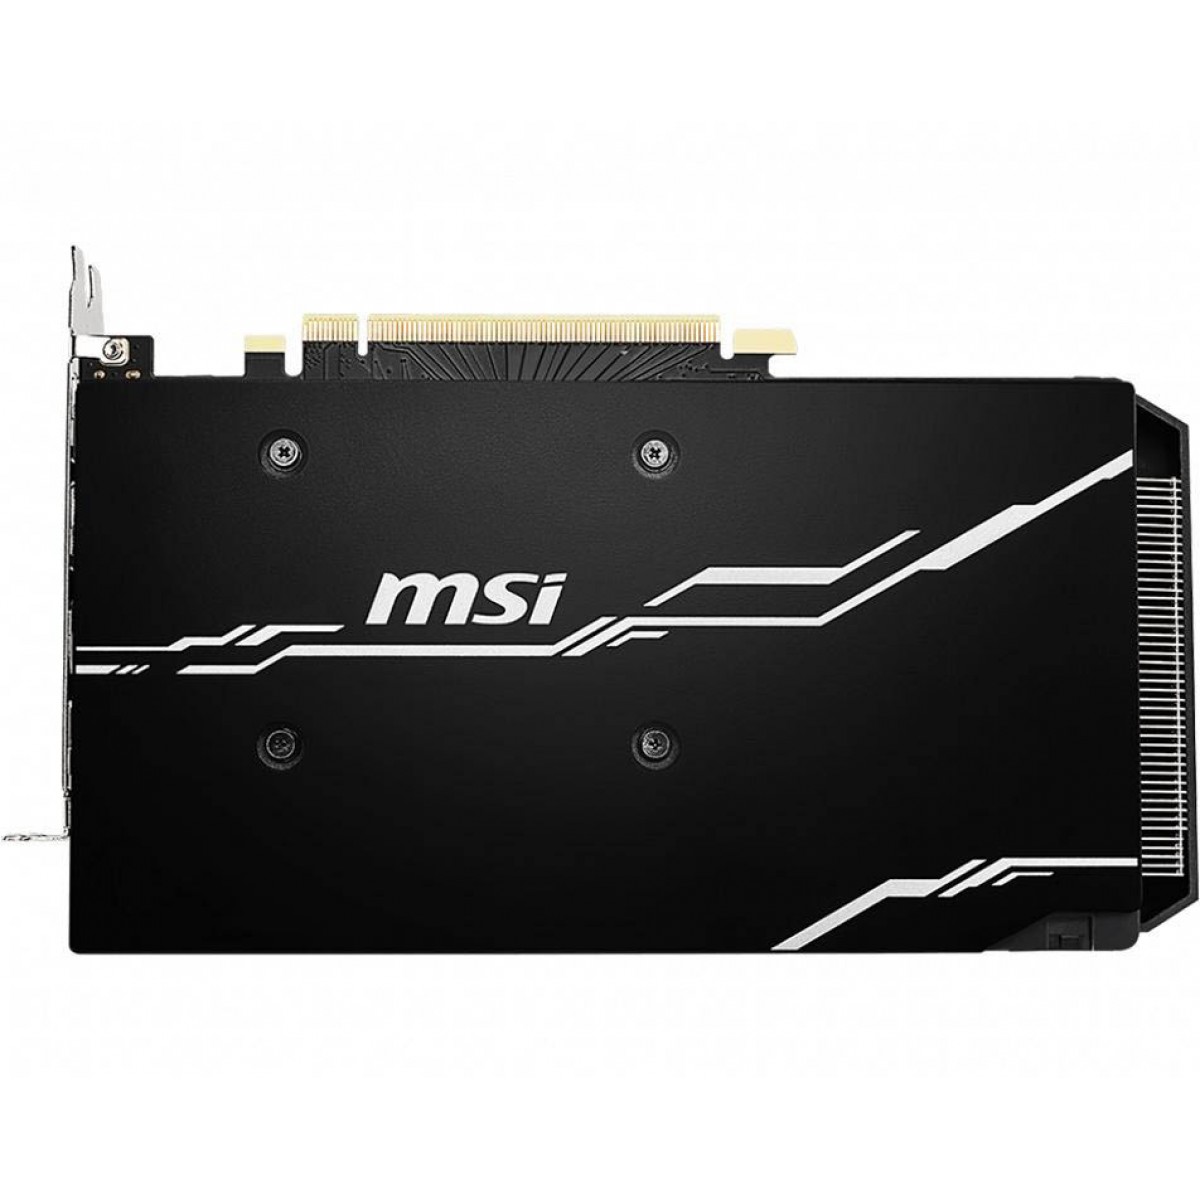 Placa de Video MSI, GeForce, RTX 2060 Super Ventus OC, Dual, 8GB, GDDR6, 256Bit, 912-V375-253